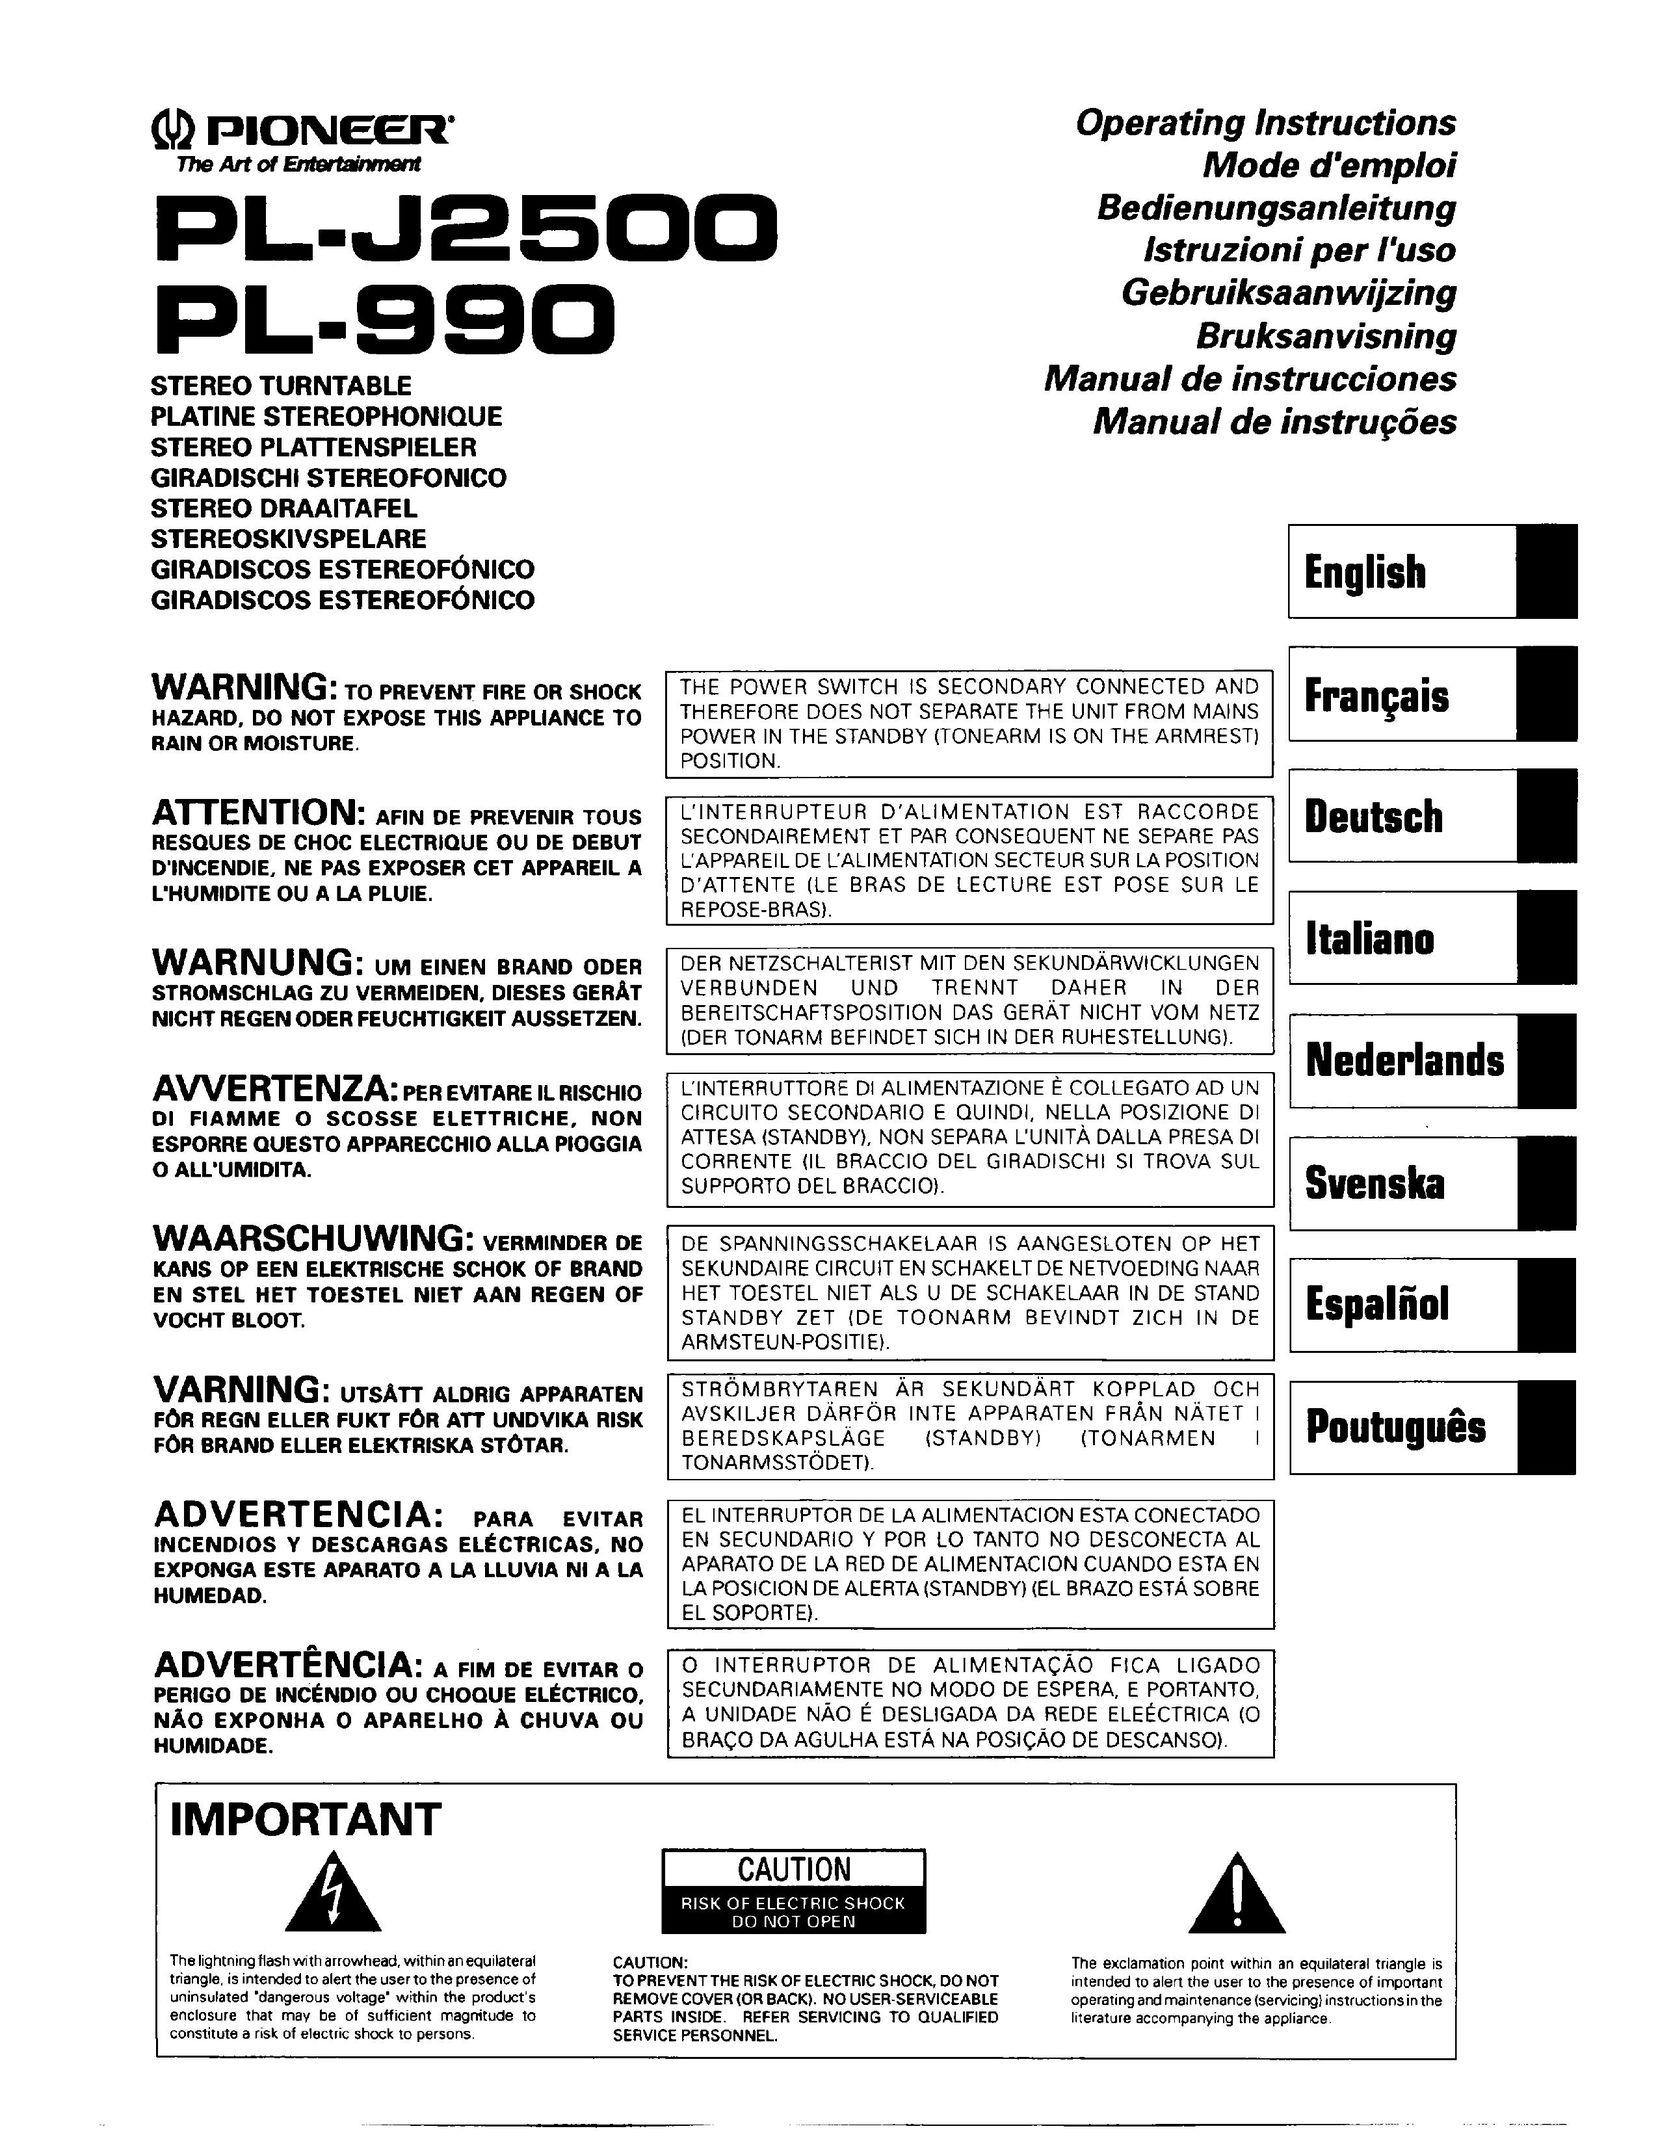 Pioneer PL-990 Turntable User Manual